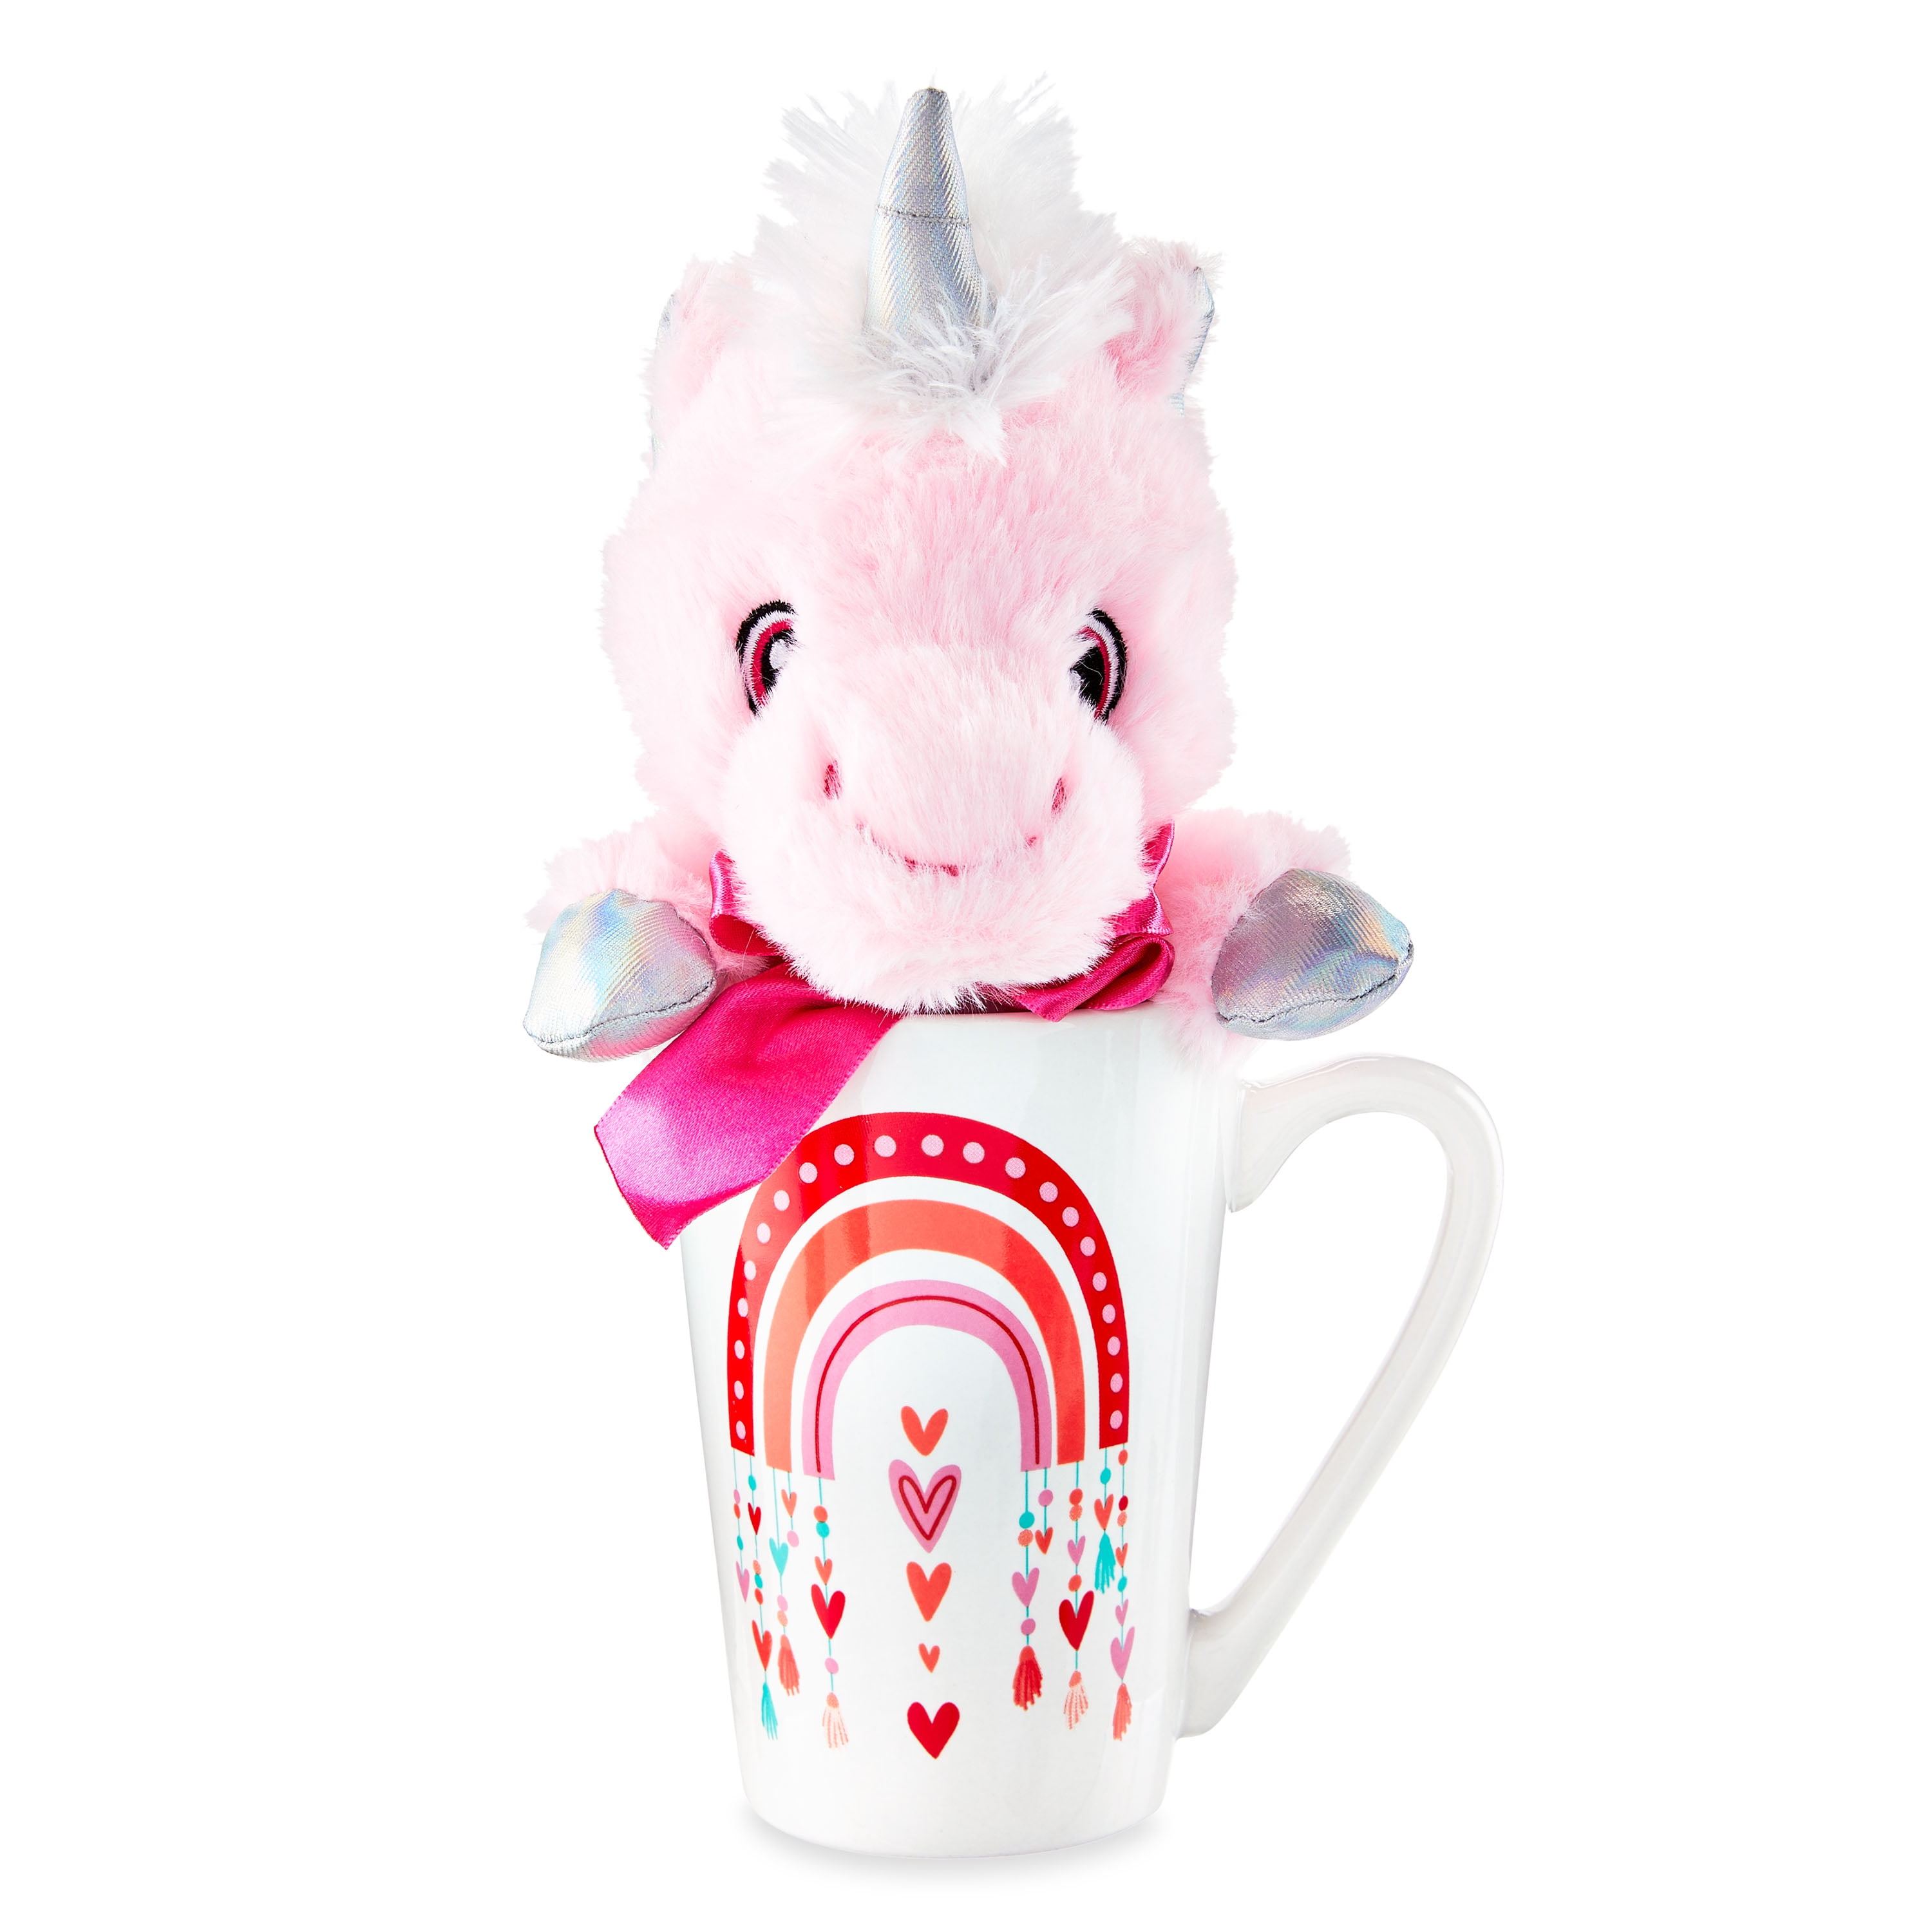 Way to Celebrate! Valentine's Day Plush Toy in Latte Mug, Unicorn